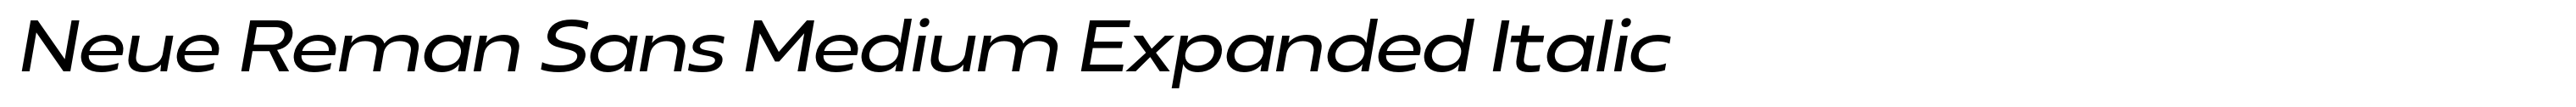 Neue Reman Sans Medium Expanded Italic